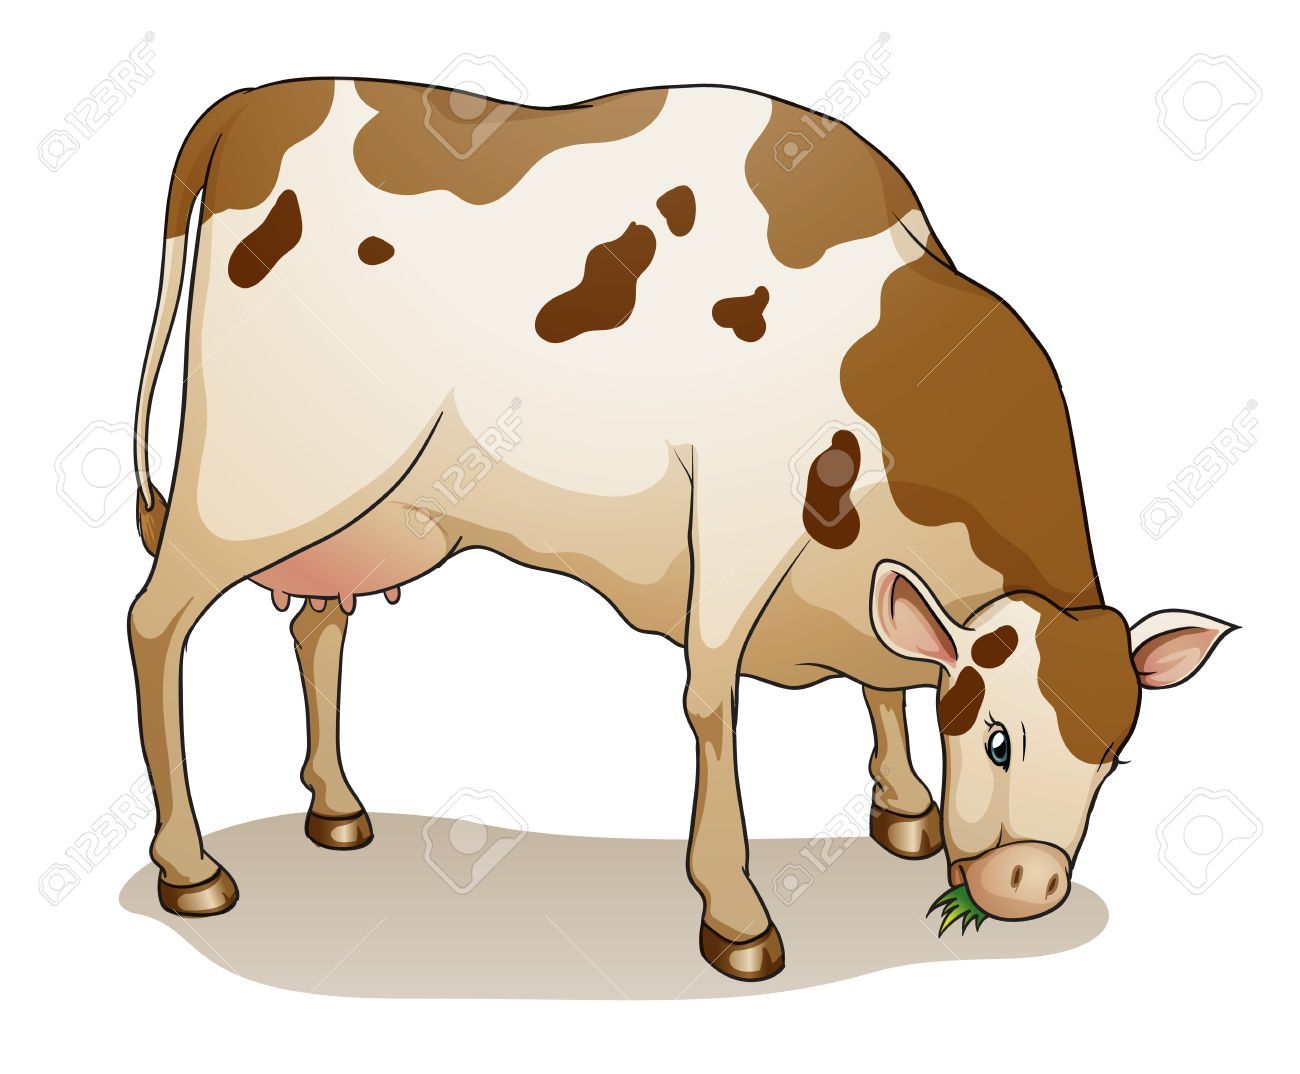 Cow grazing clipart 3 » Clipart Portal.